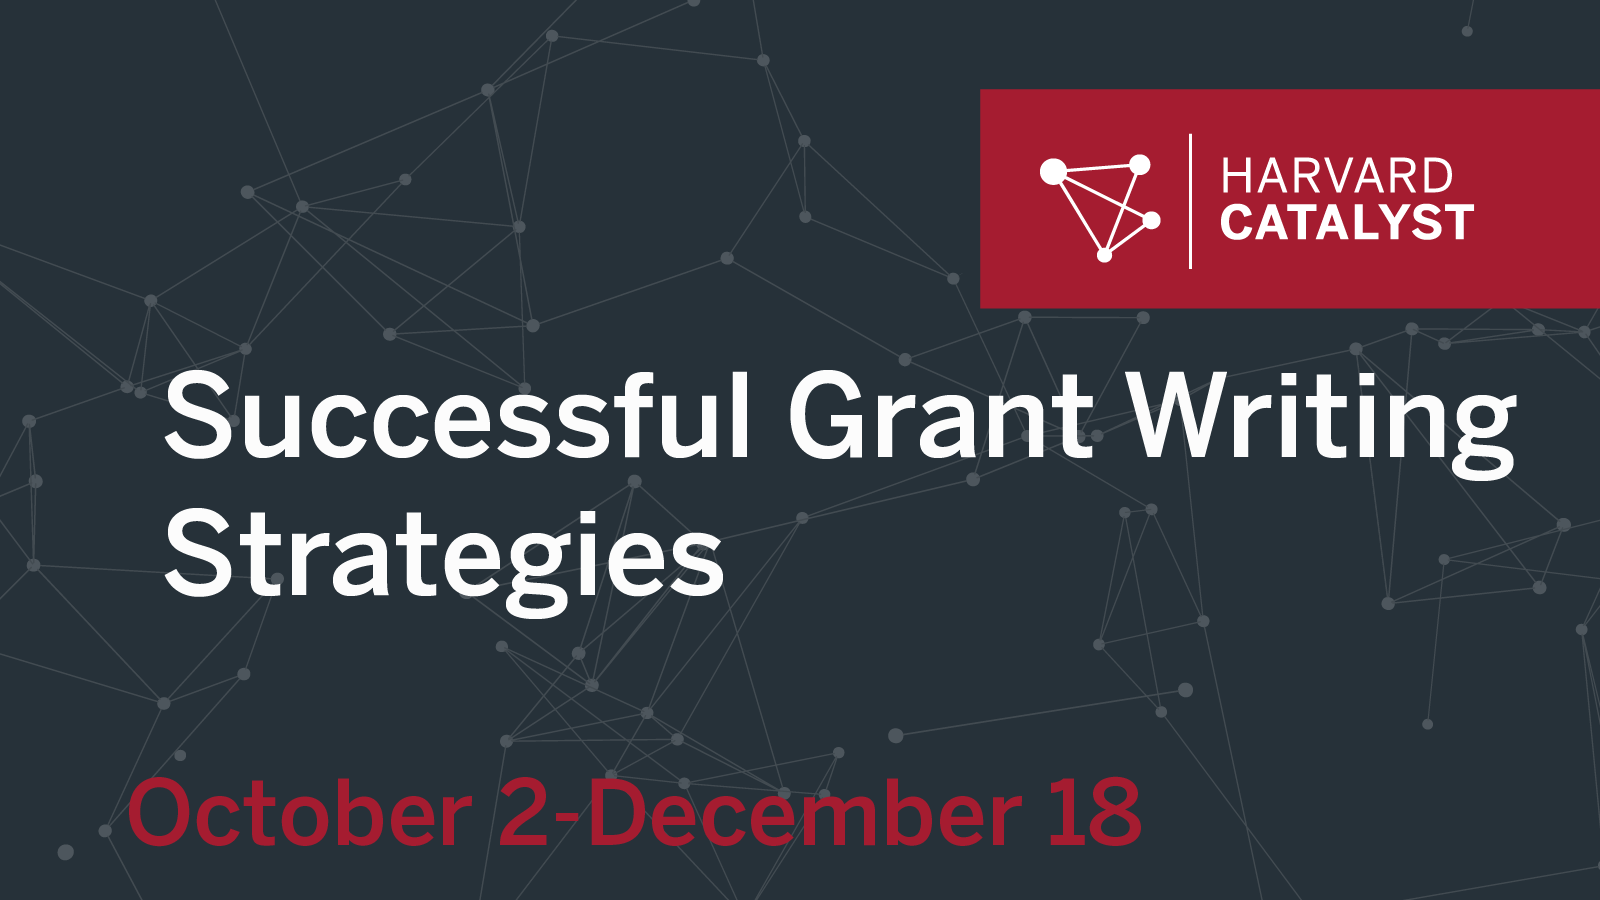 Successful Grant Writing Strategies October 2-December 18